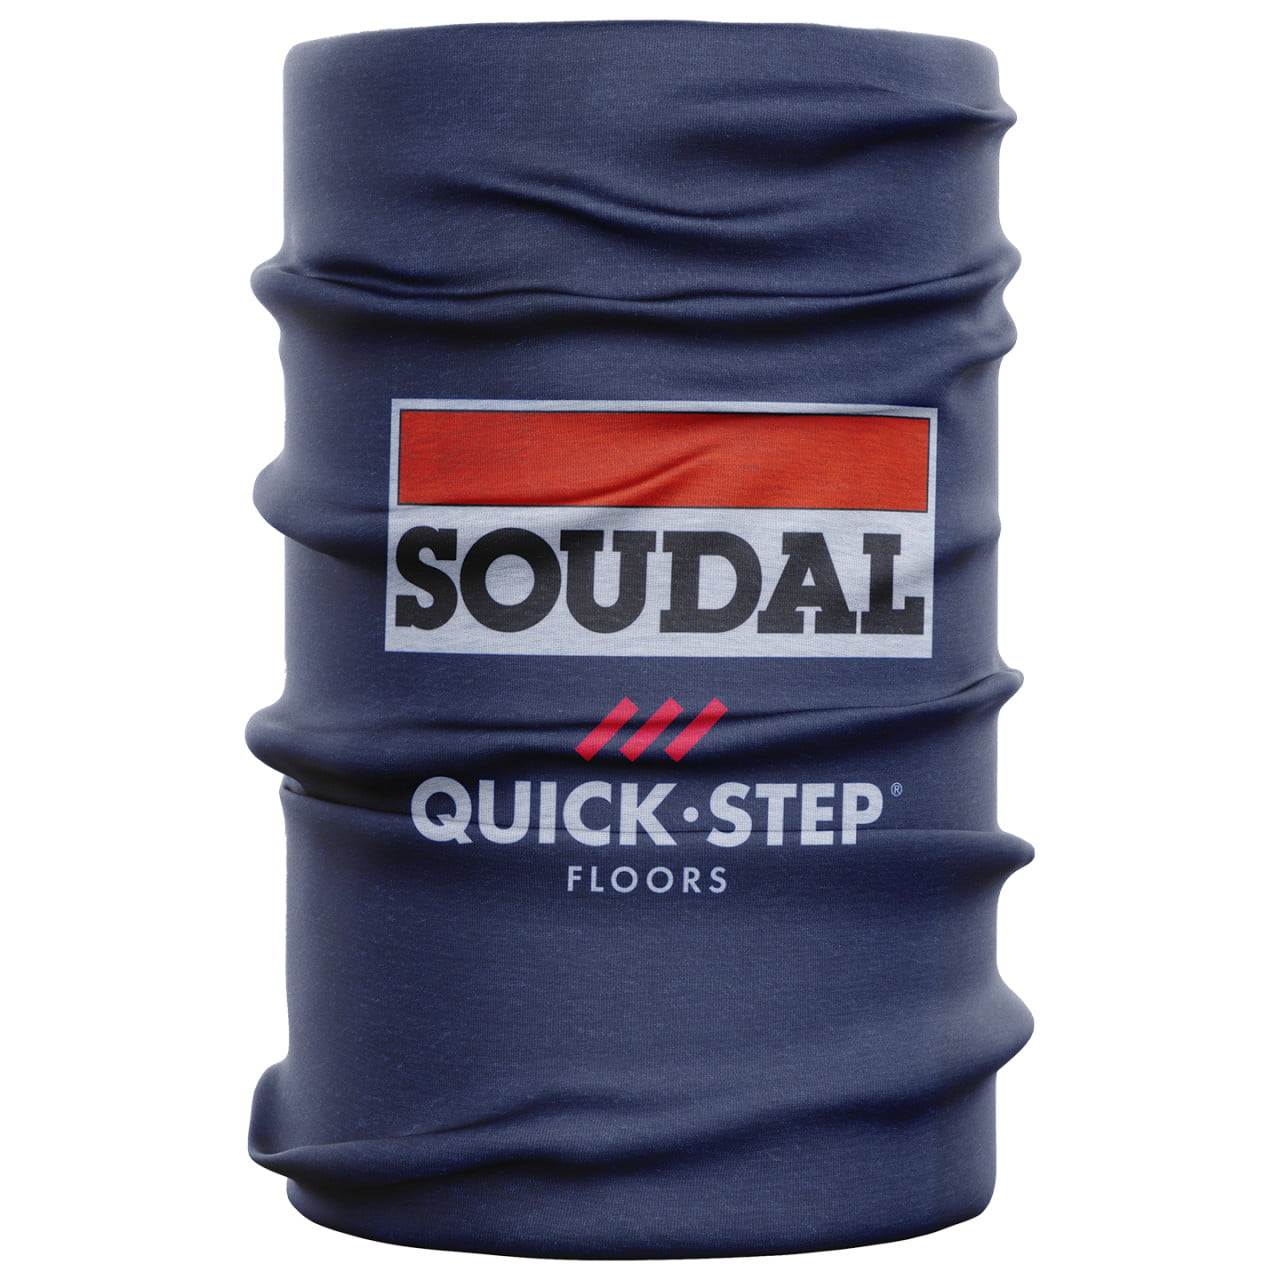 SOUDAL QUICK-STEP Multifunctional Headwear 2024